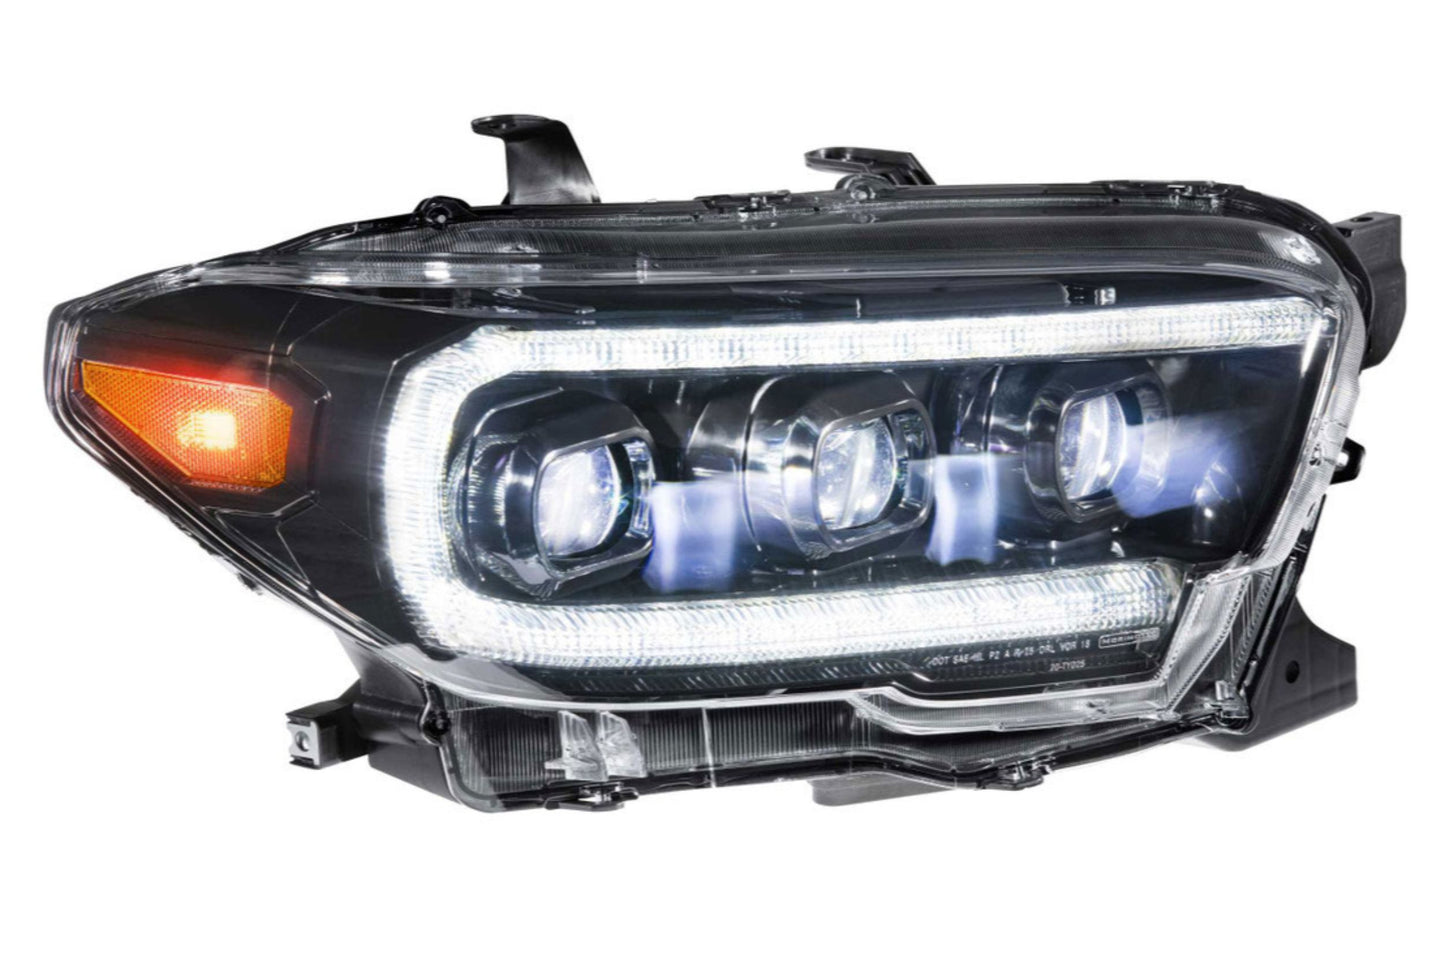 Adapter: Toyota Tacoma XB LED Headlight Harness for OE LED DRL